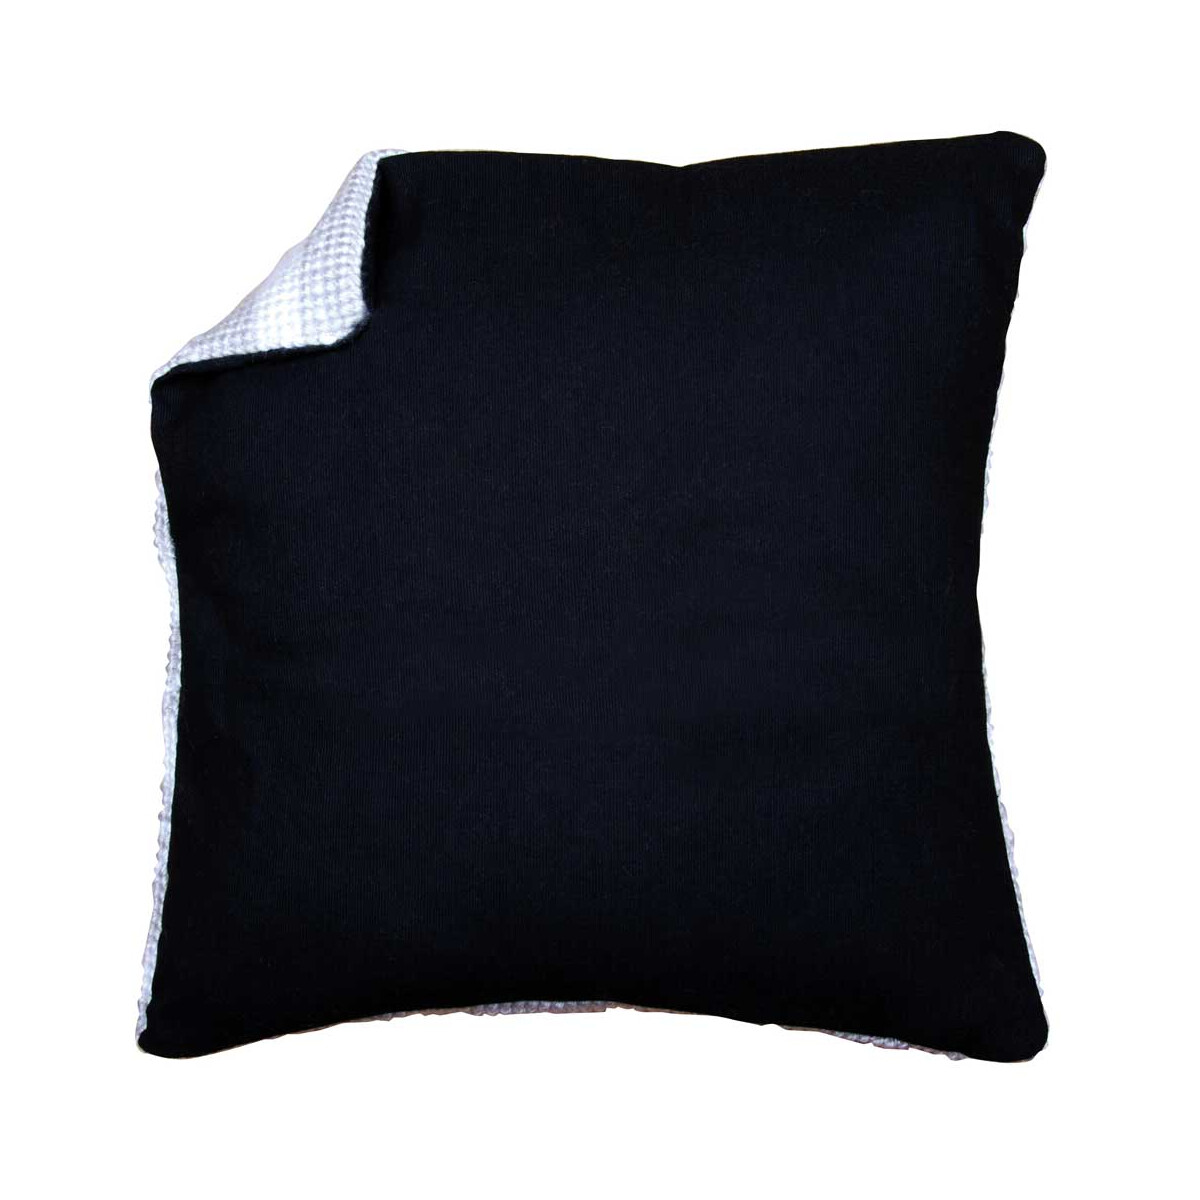 Vervaco Cushion Back without Zipper - Black, 45 x 45 cm, DIY